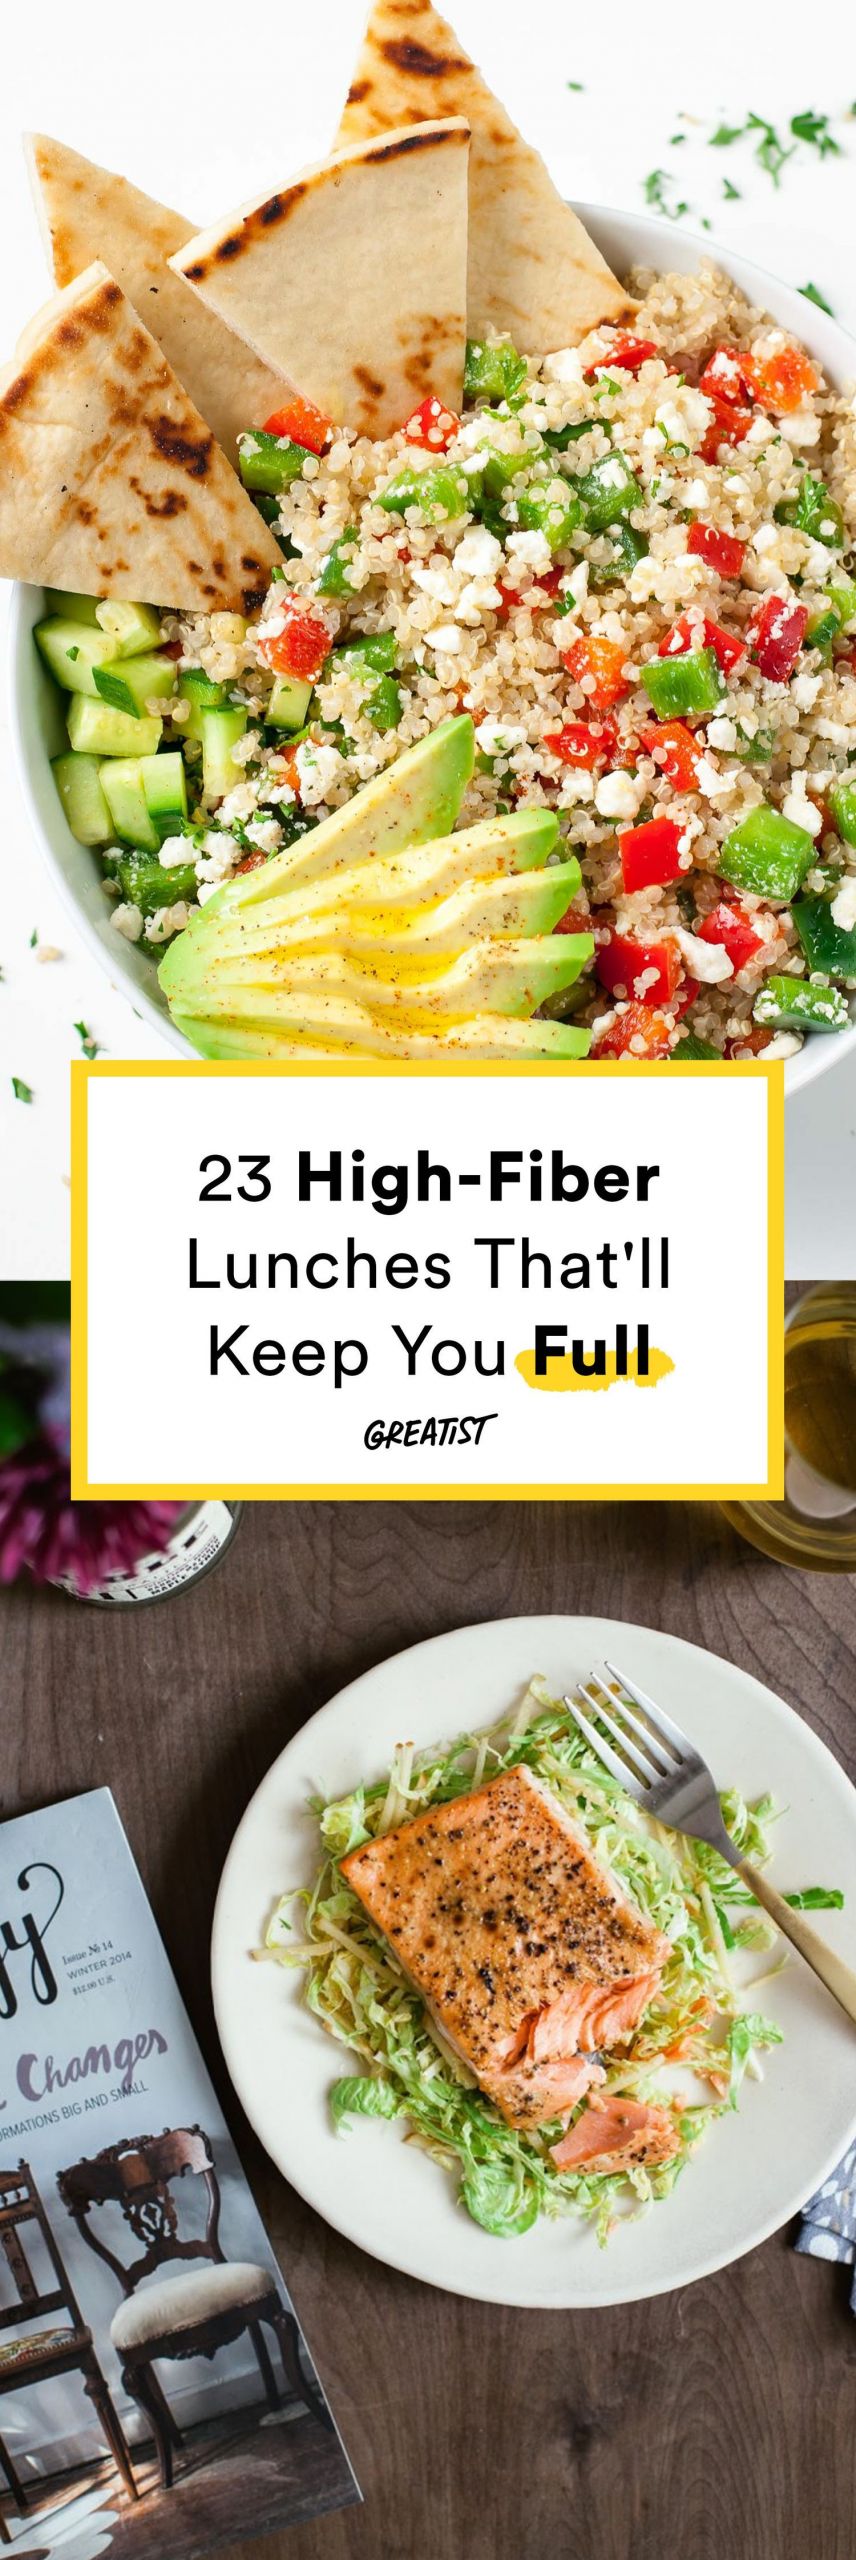 High Fiber Recipes For Dinner
 24 the Best Ideas for High Fiber Recipes for Lunch